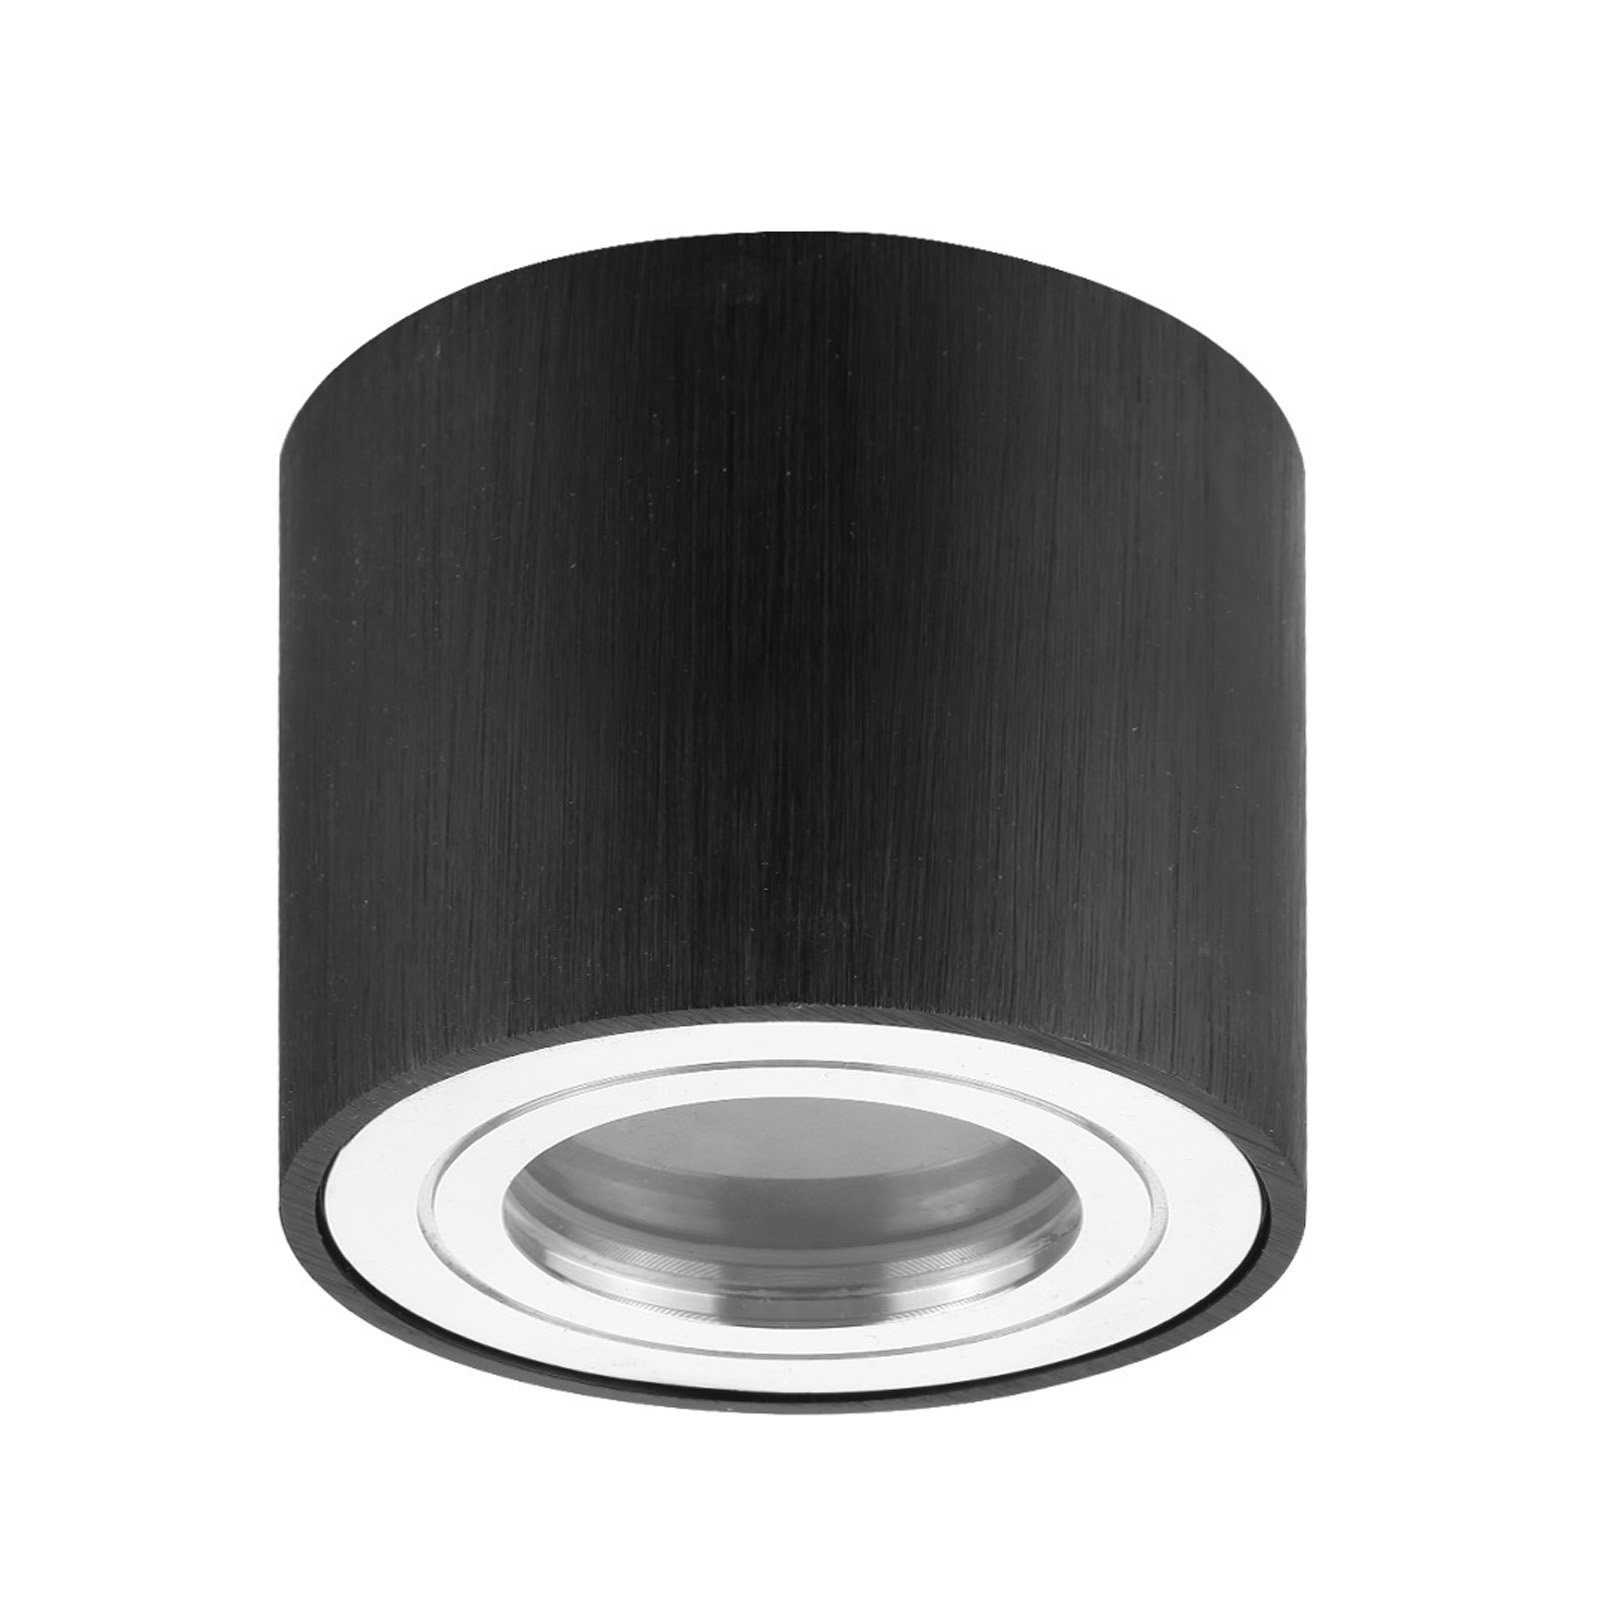 Sweet LED Aufbauleuchte Bad LED, schwarz chrom Deckenspot IP44 ohne Badezimmer, Aufbauspot Aluminium Aufbaustrahler Leuchtmittel